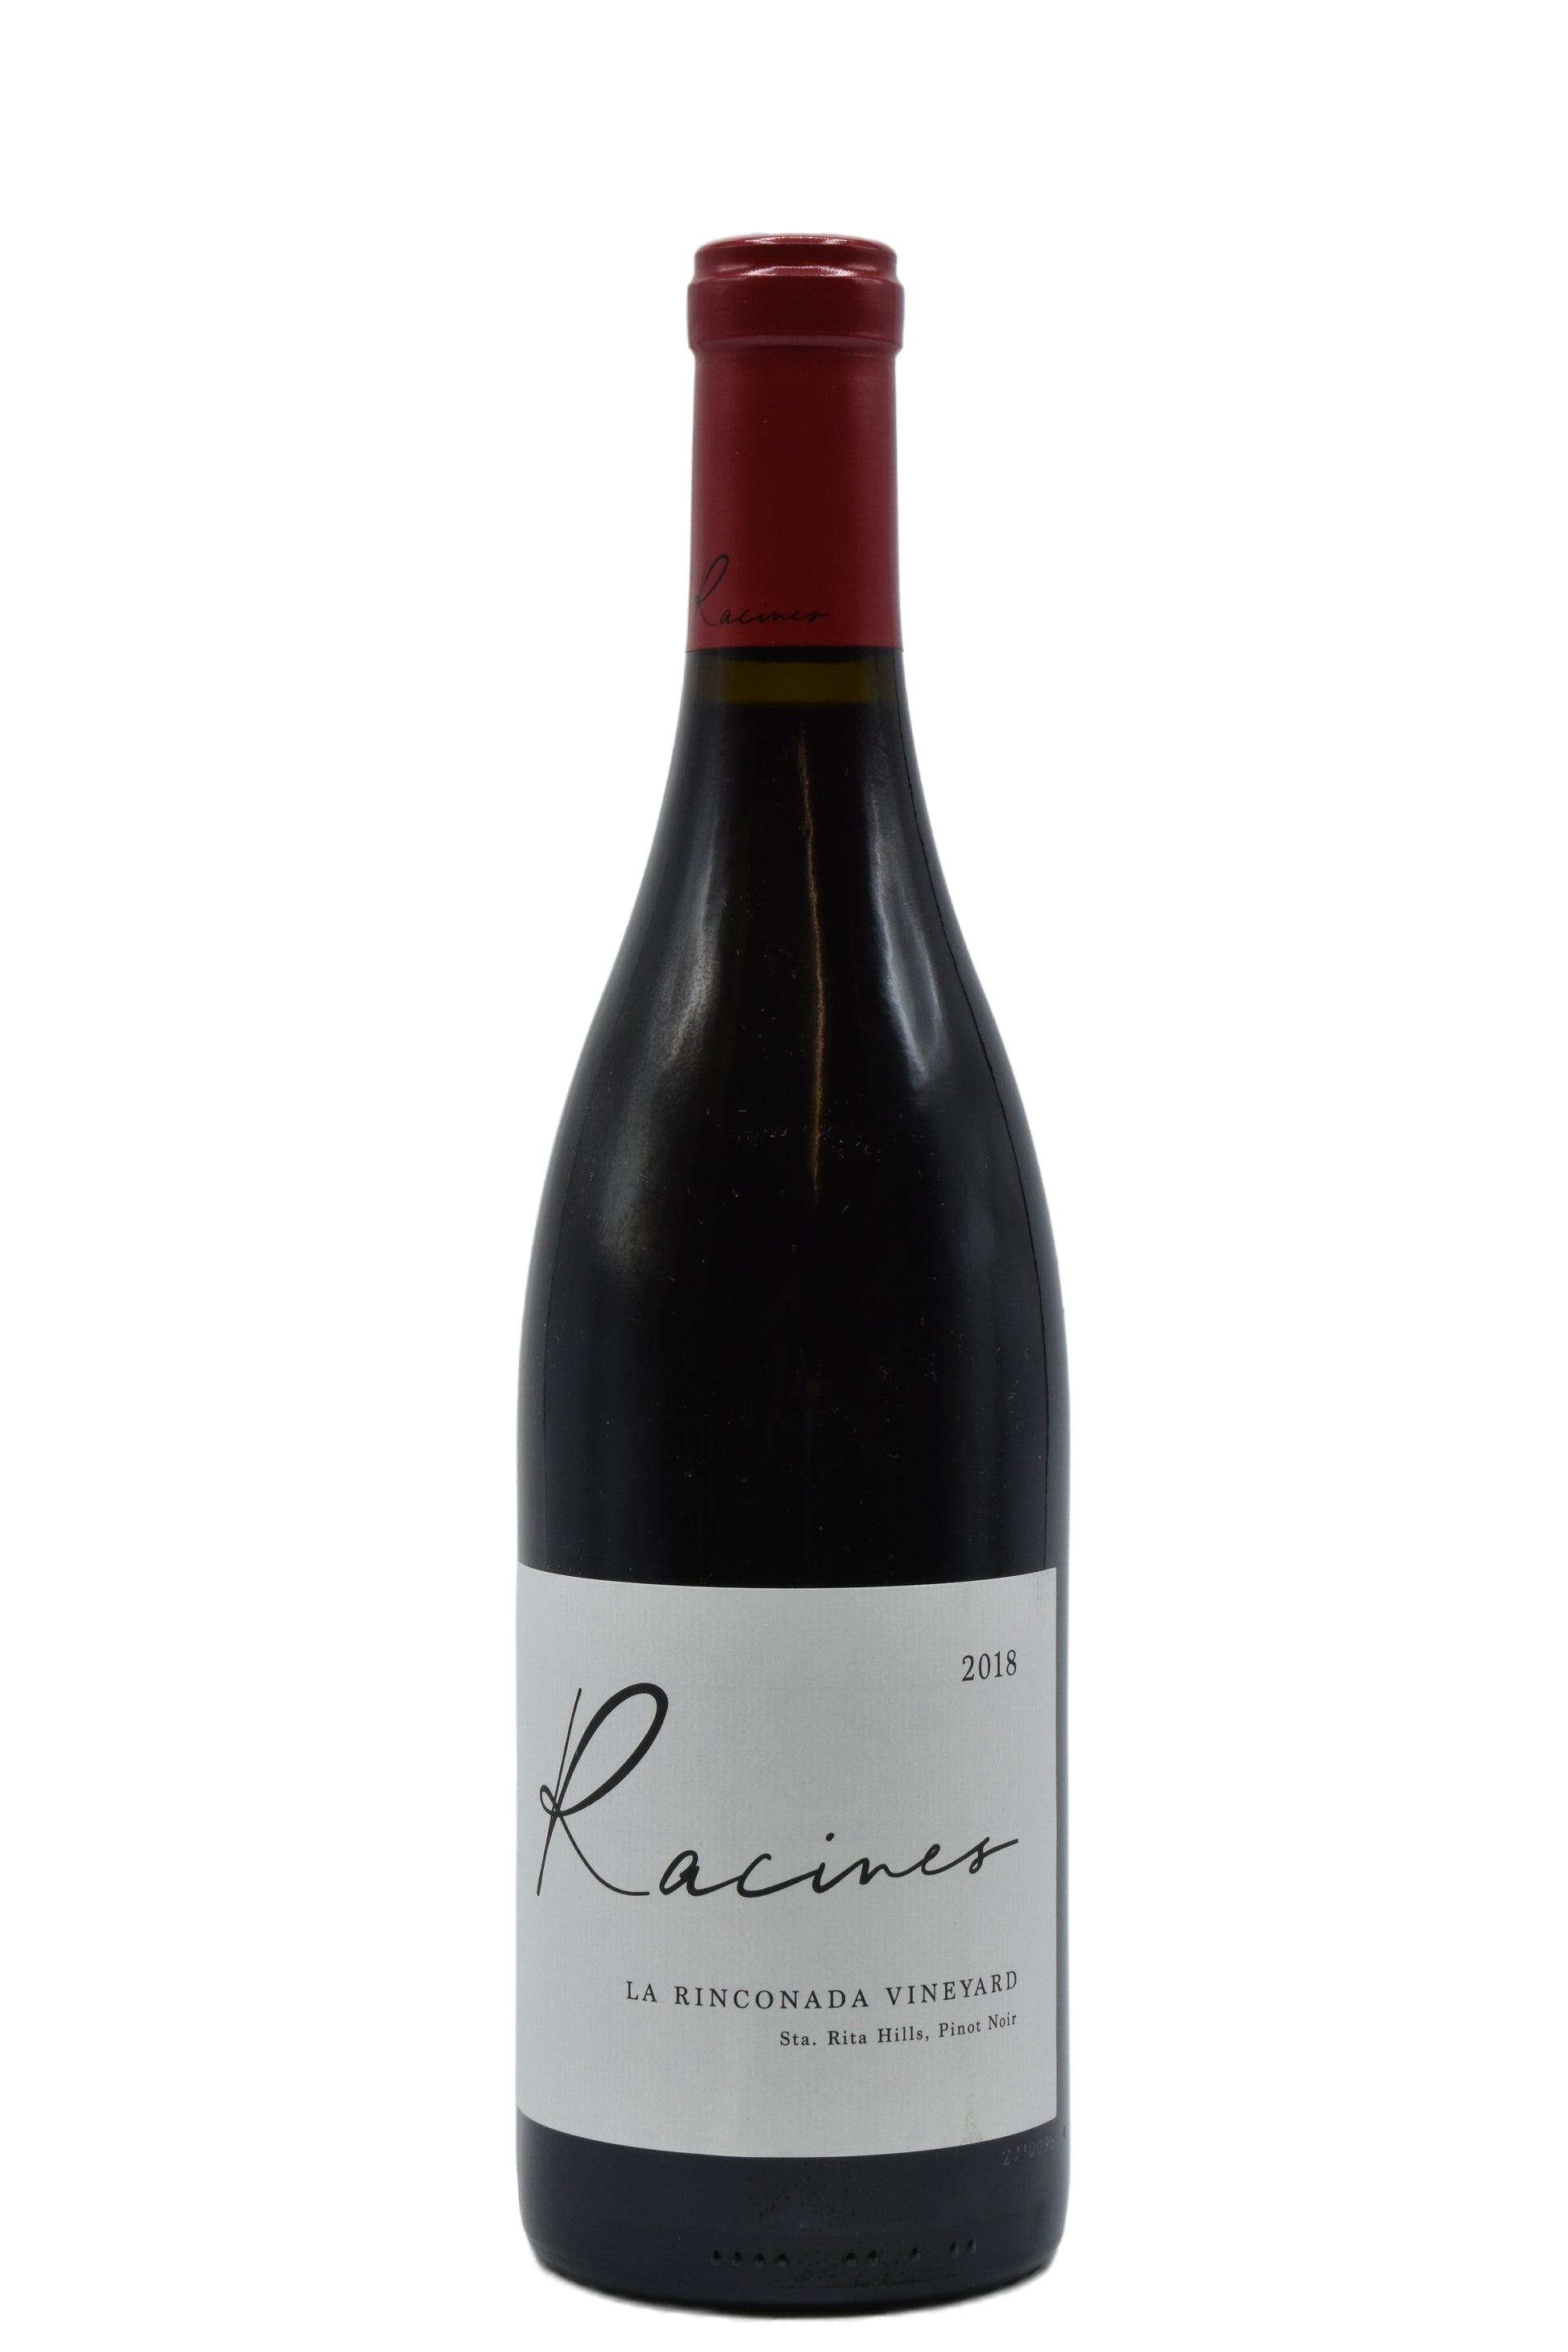 2018 Racines, La Rinconada Vineyard Pinot Noir 750ml - Walker Wine Co.